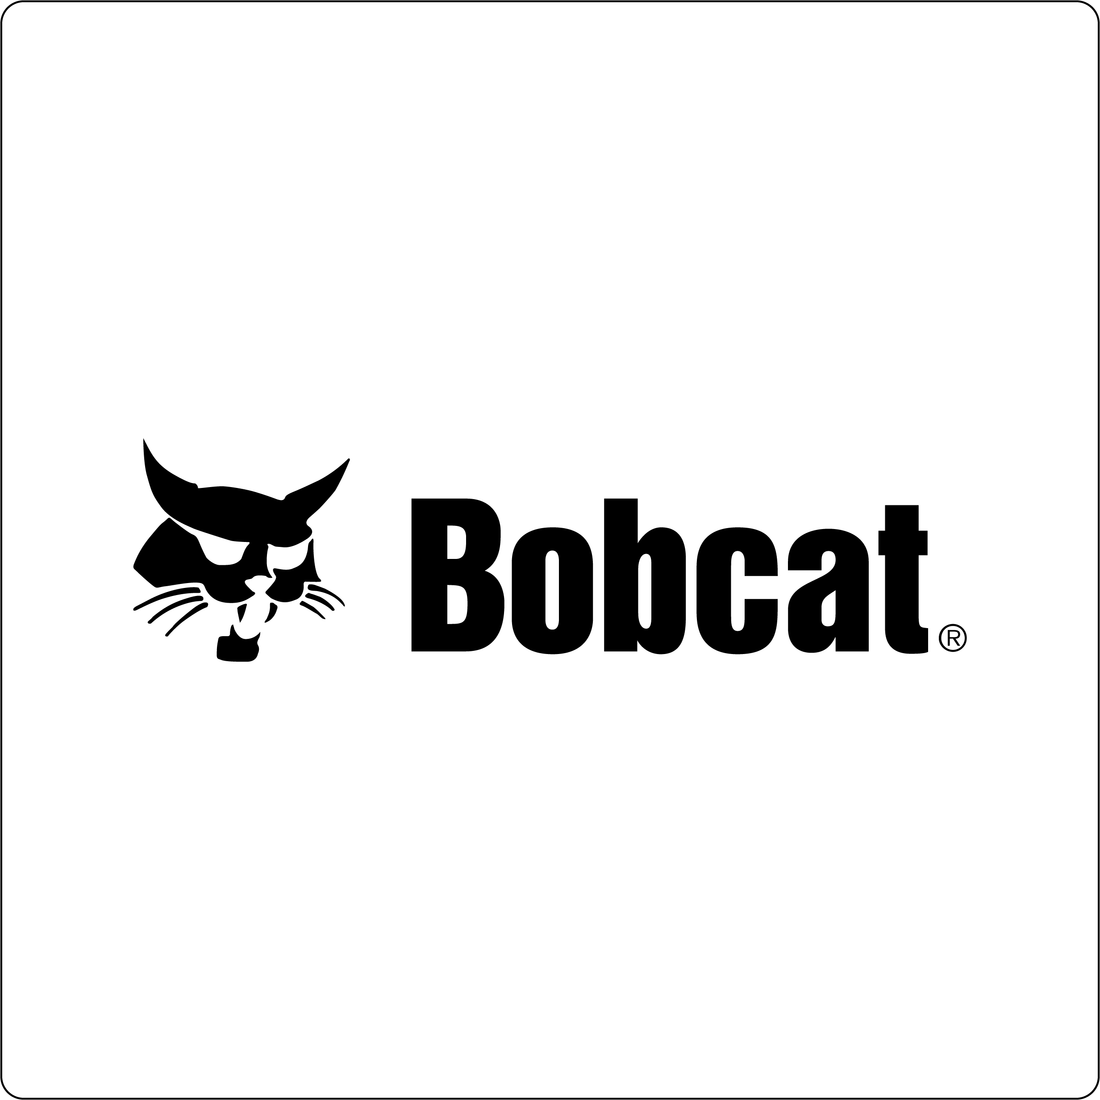  Bobcat®